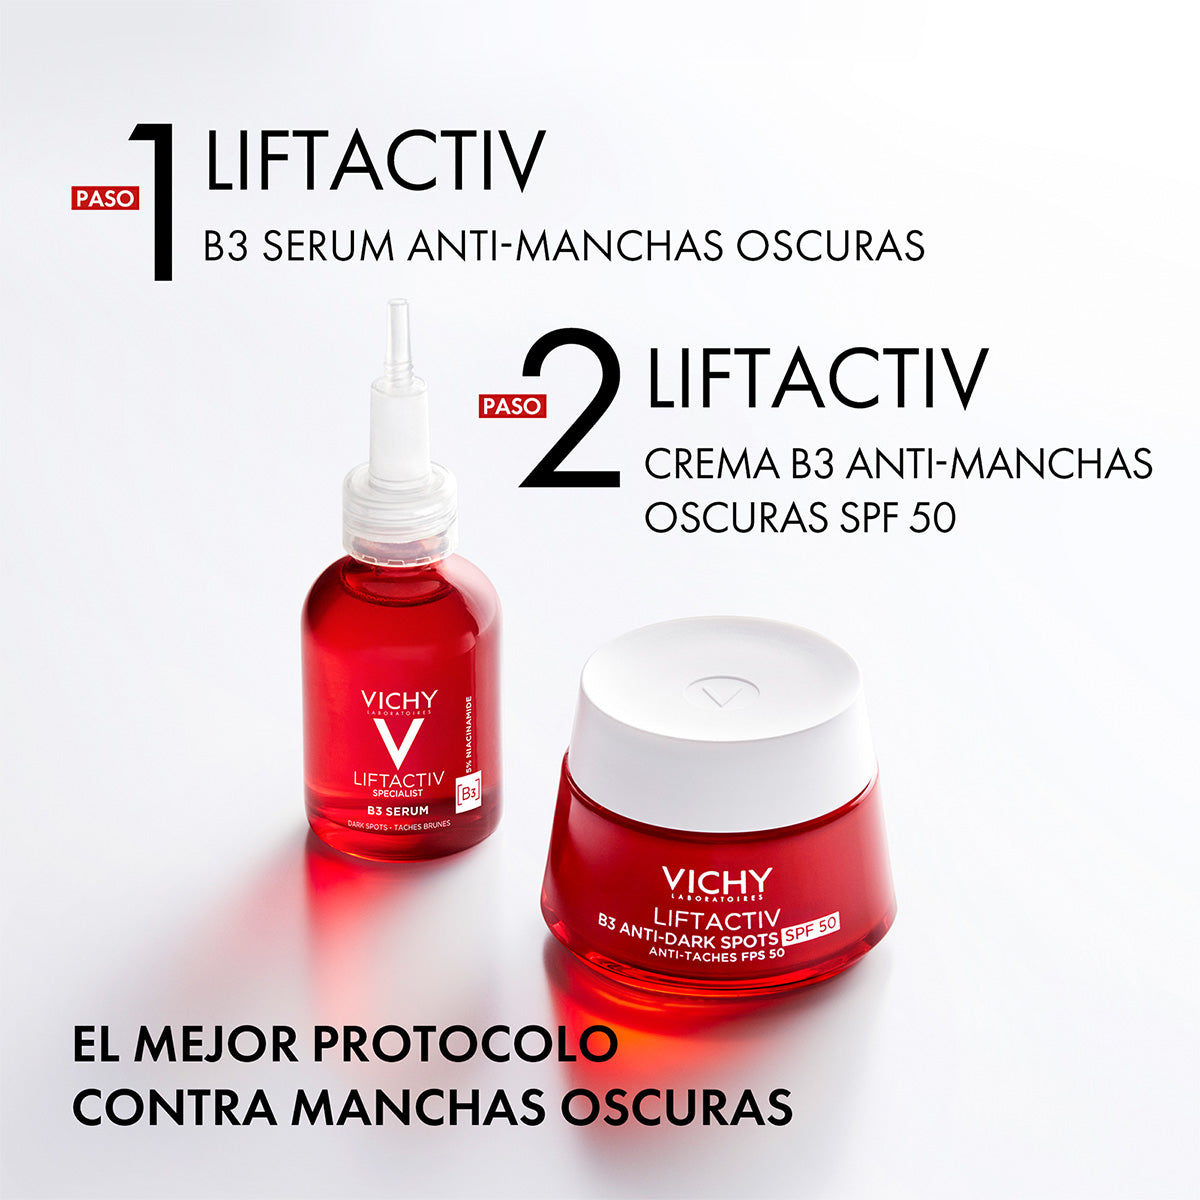 Vichy Liftactive Specialist B3 Serum, Corrigue manchas e unifica el tono de la piel, 30ml.